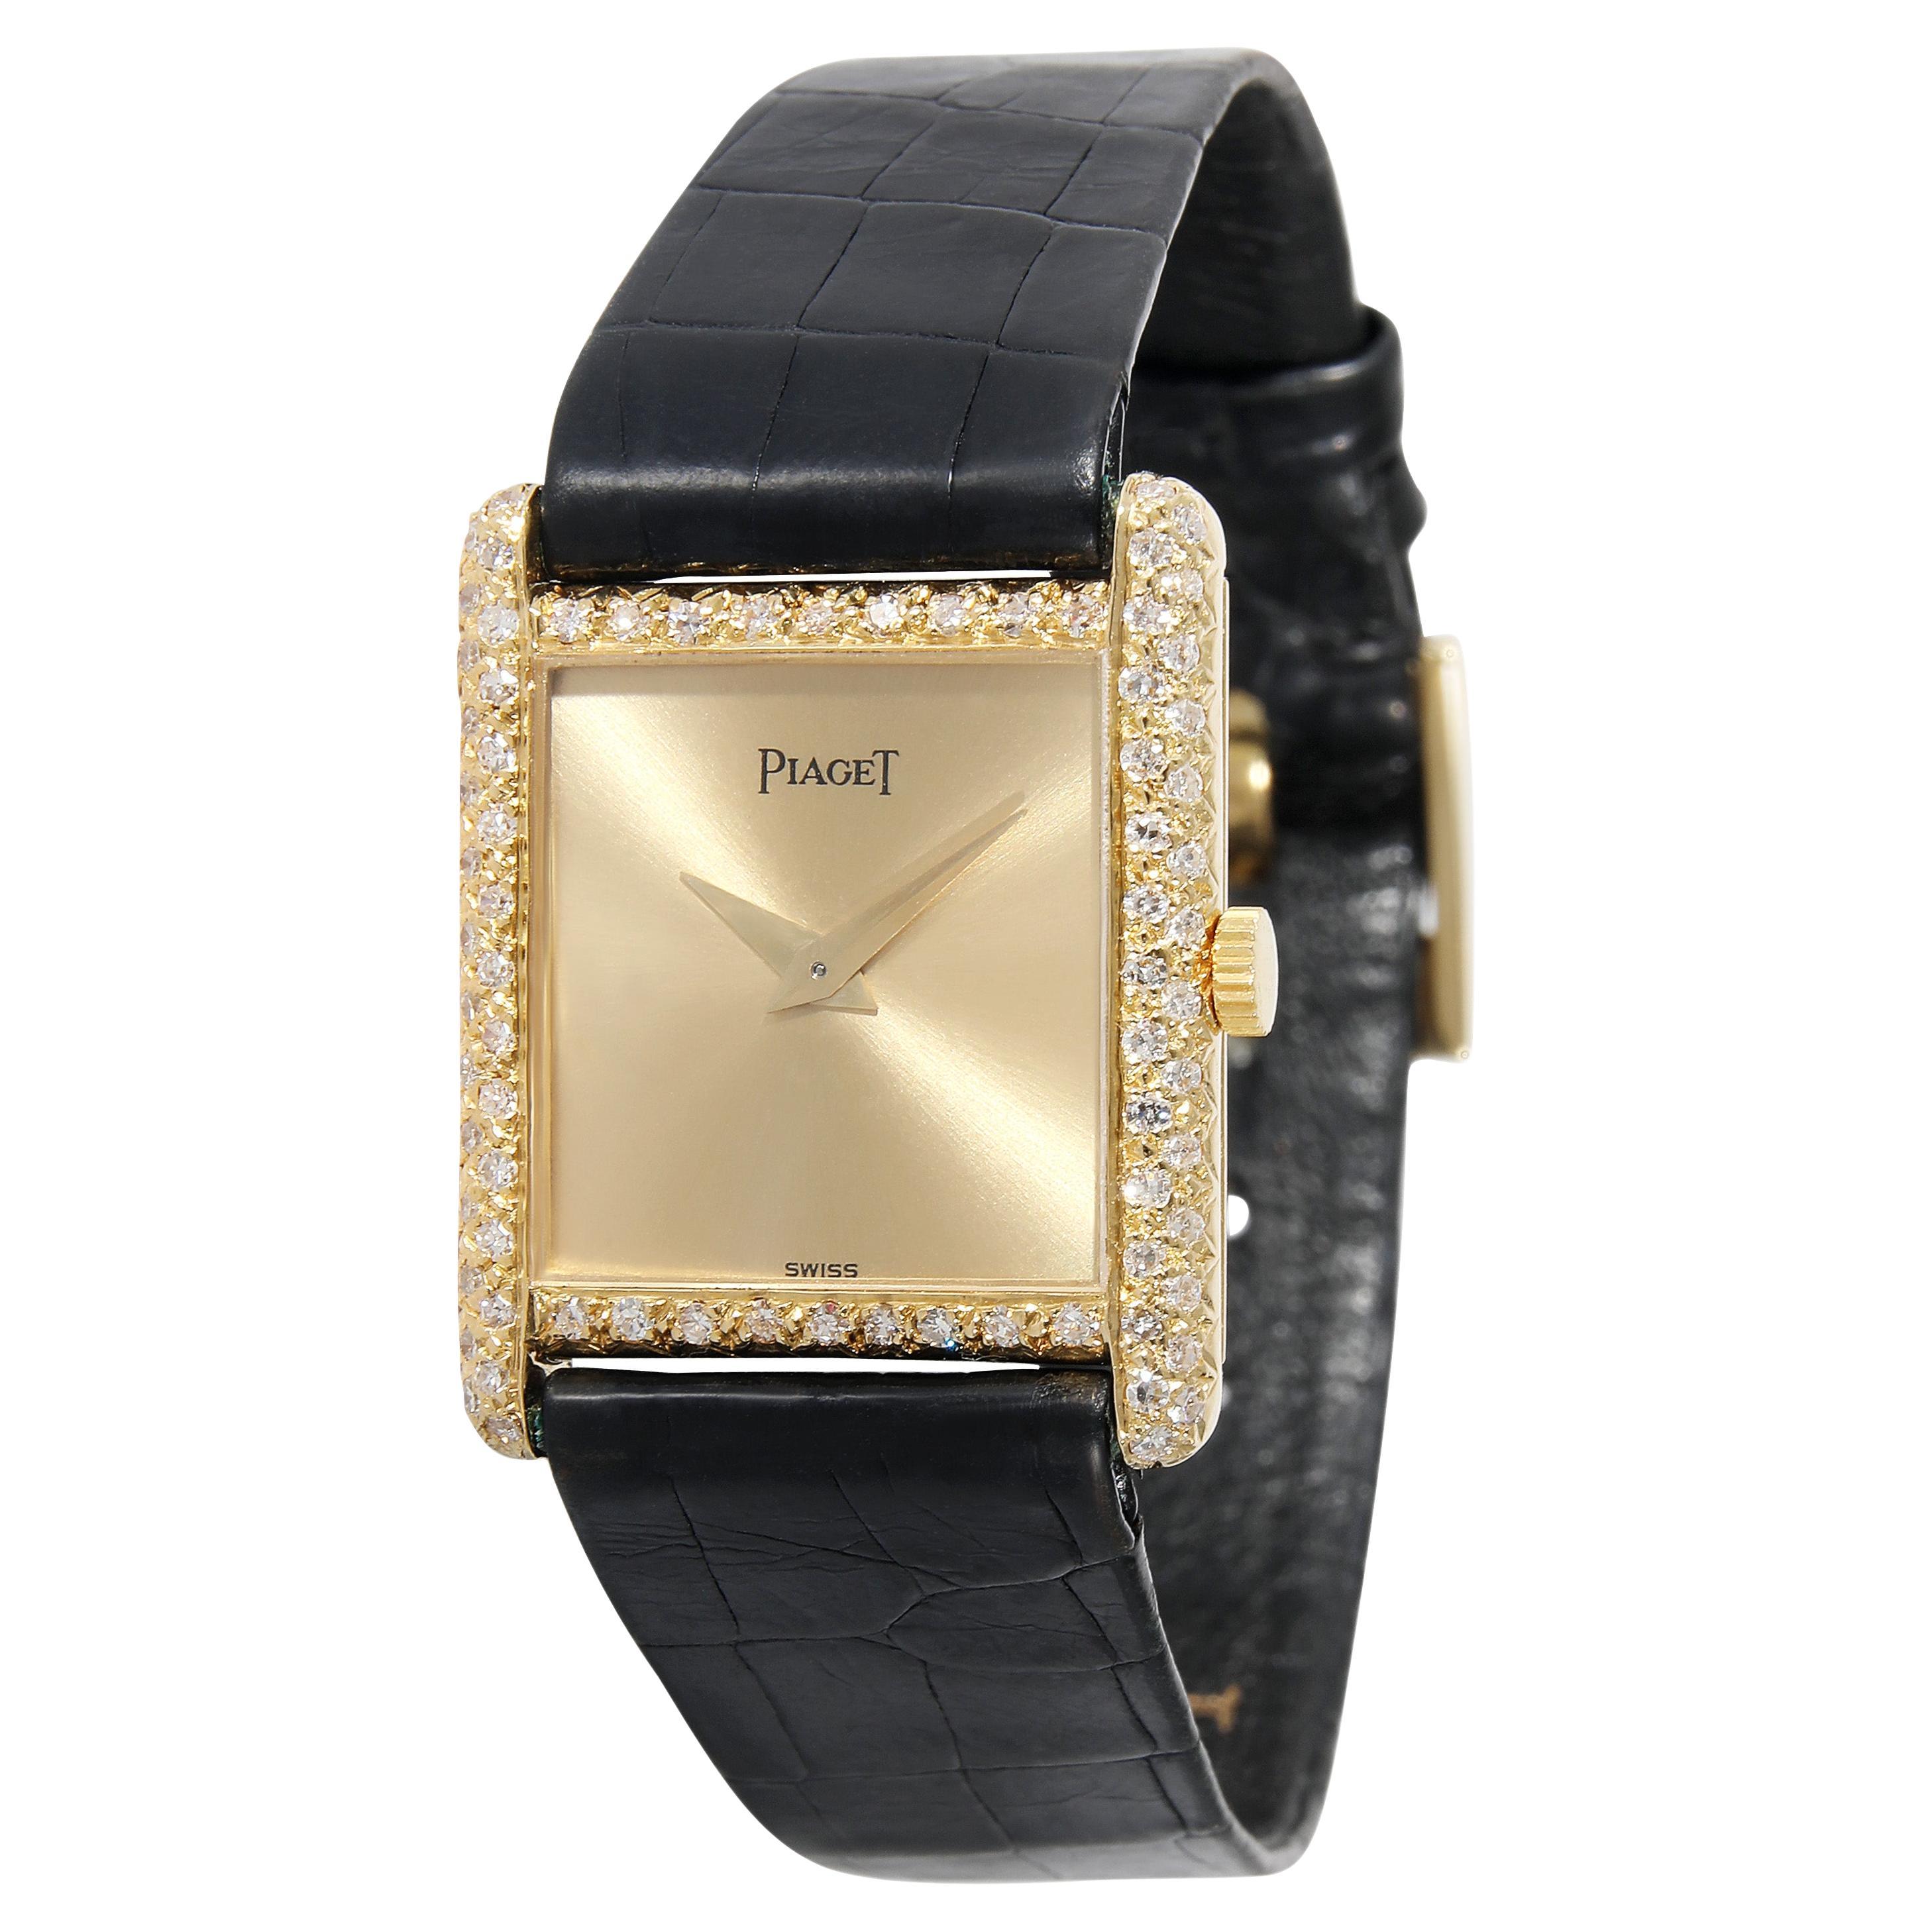 Piaget Classique 40825 Women's Watch in 18kt Yellow Gold